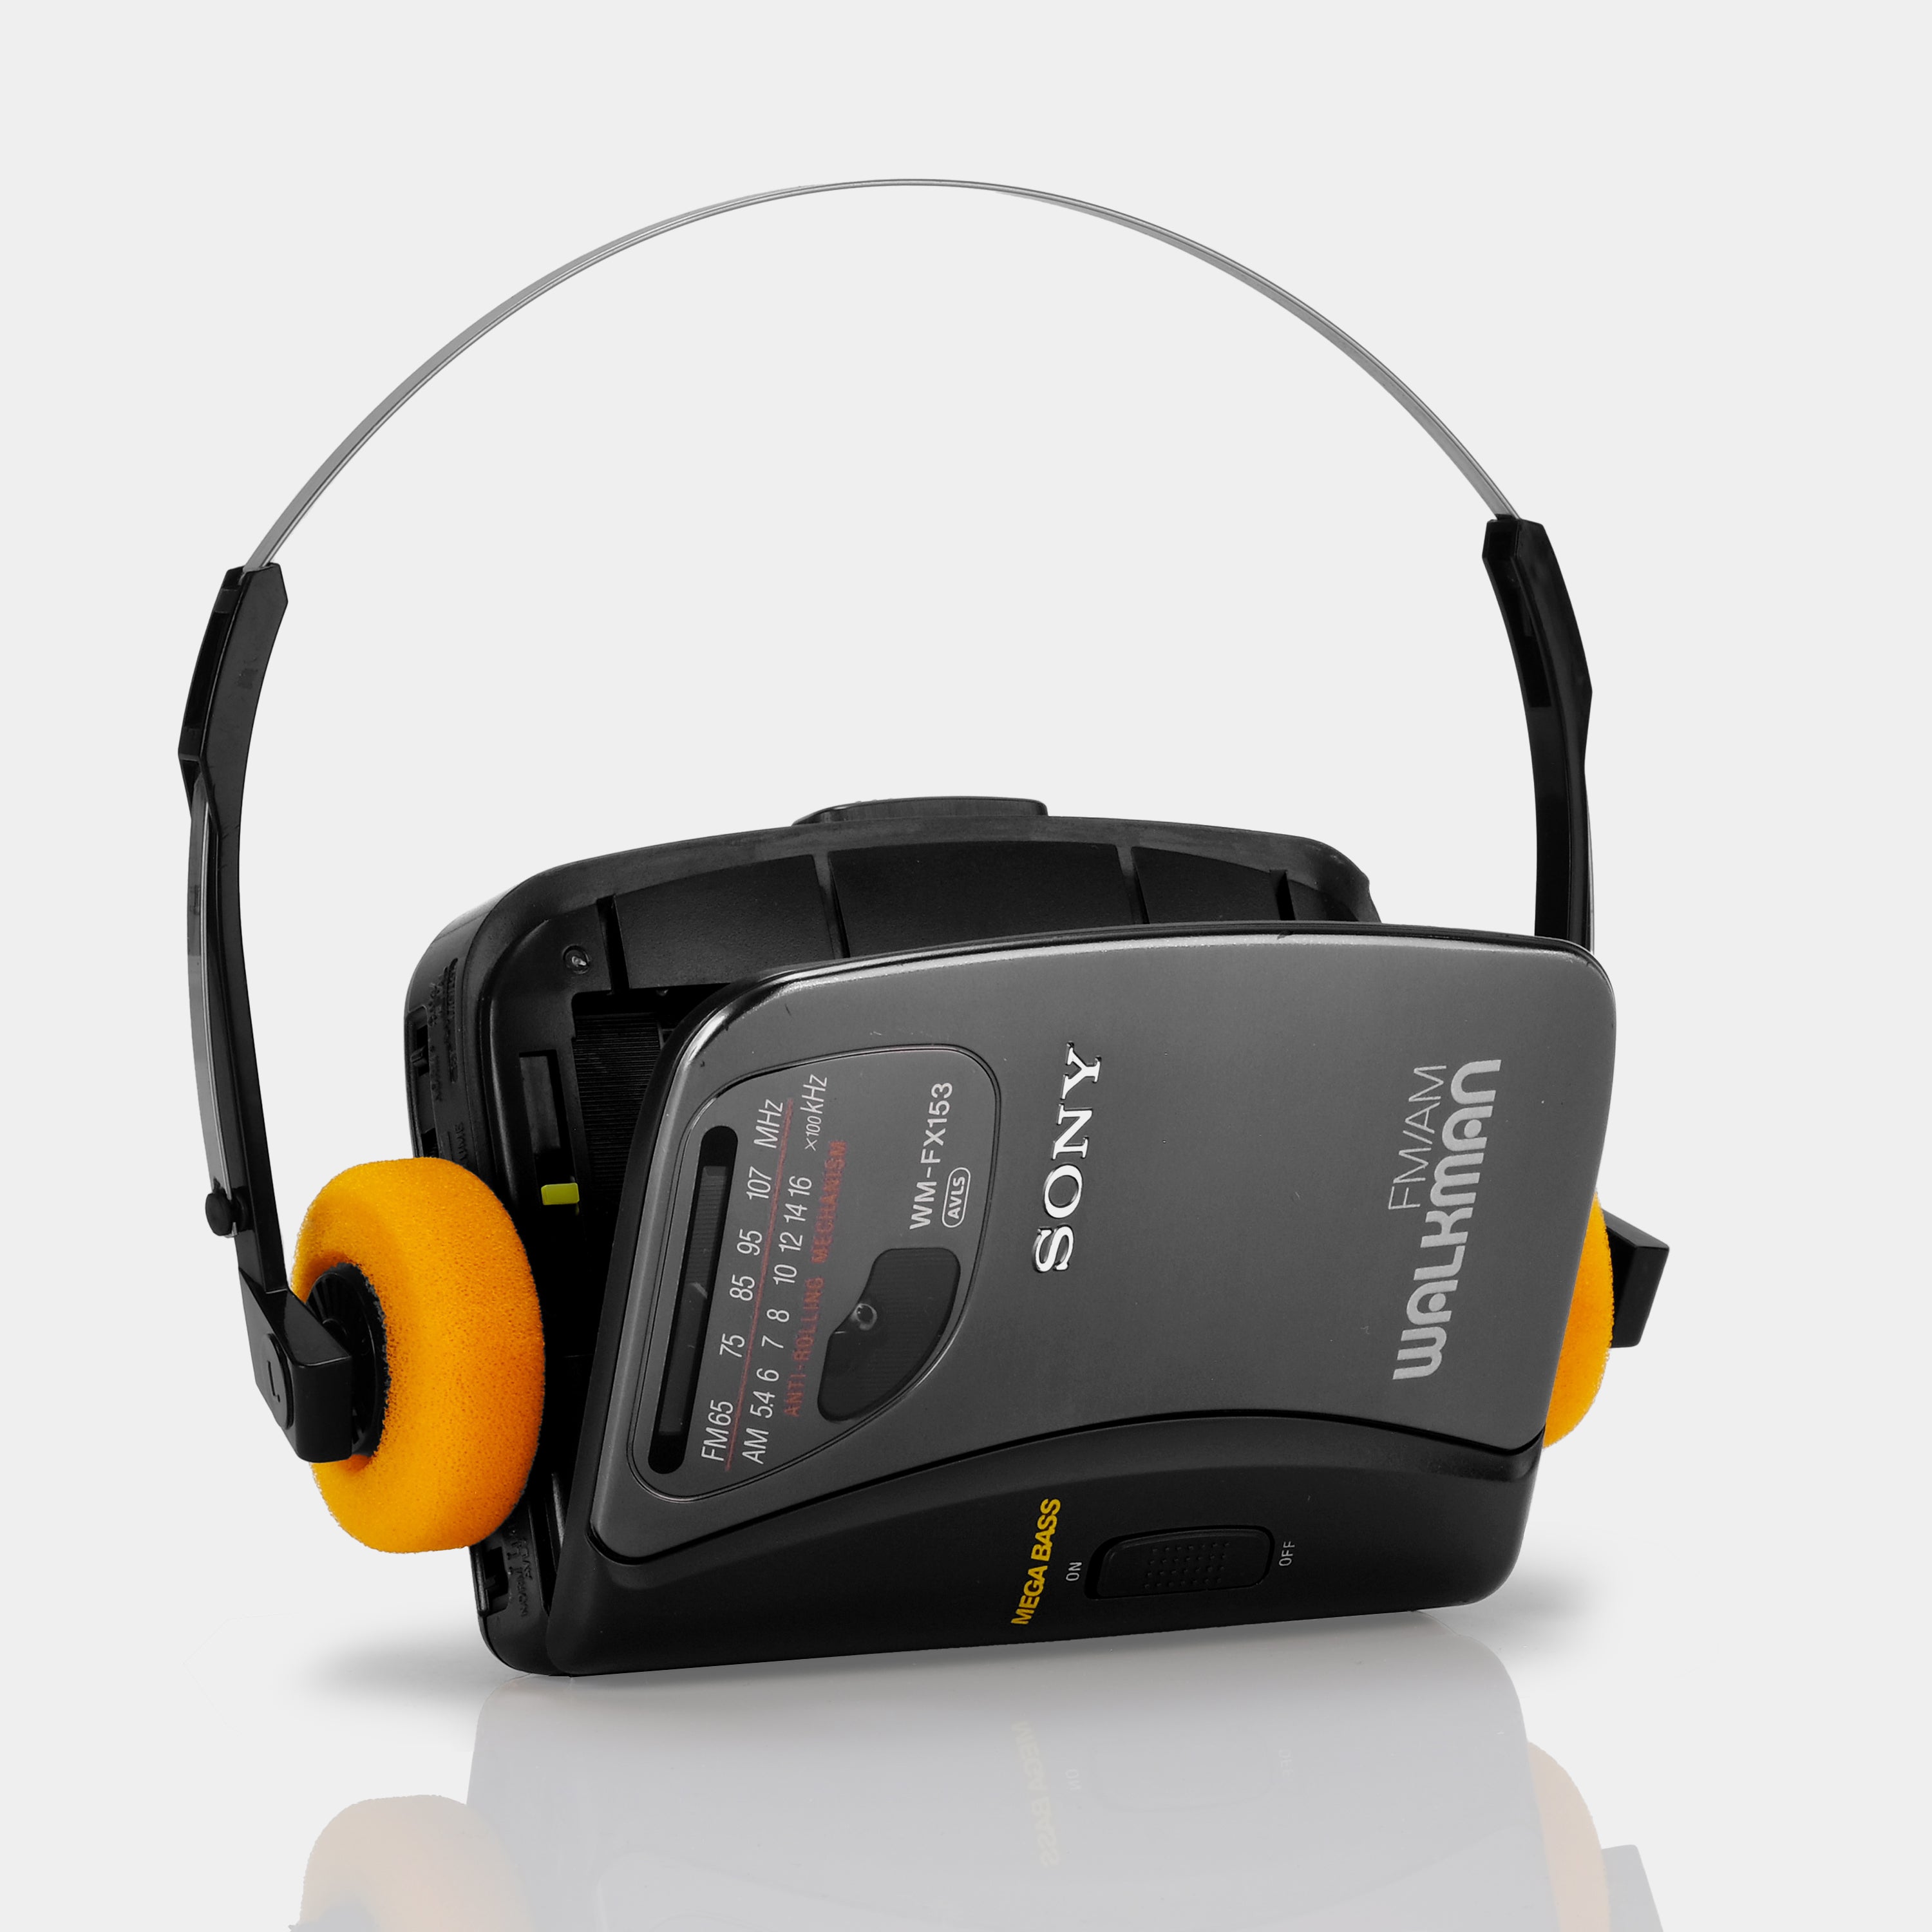 Sony Walkman WM-FX153 AM/FM Portable Cassette Player